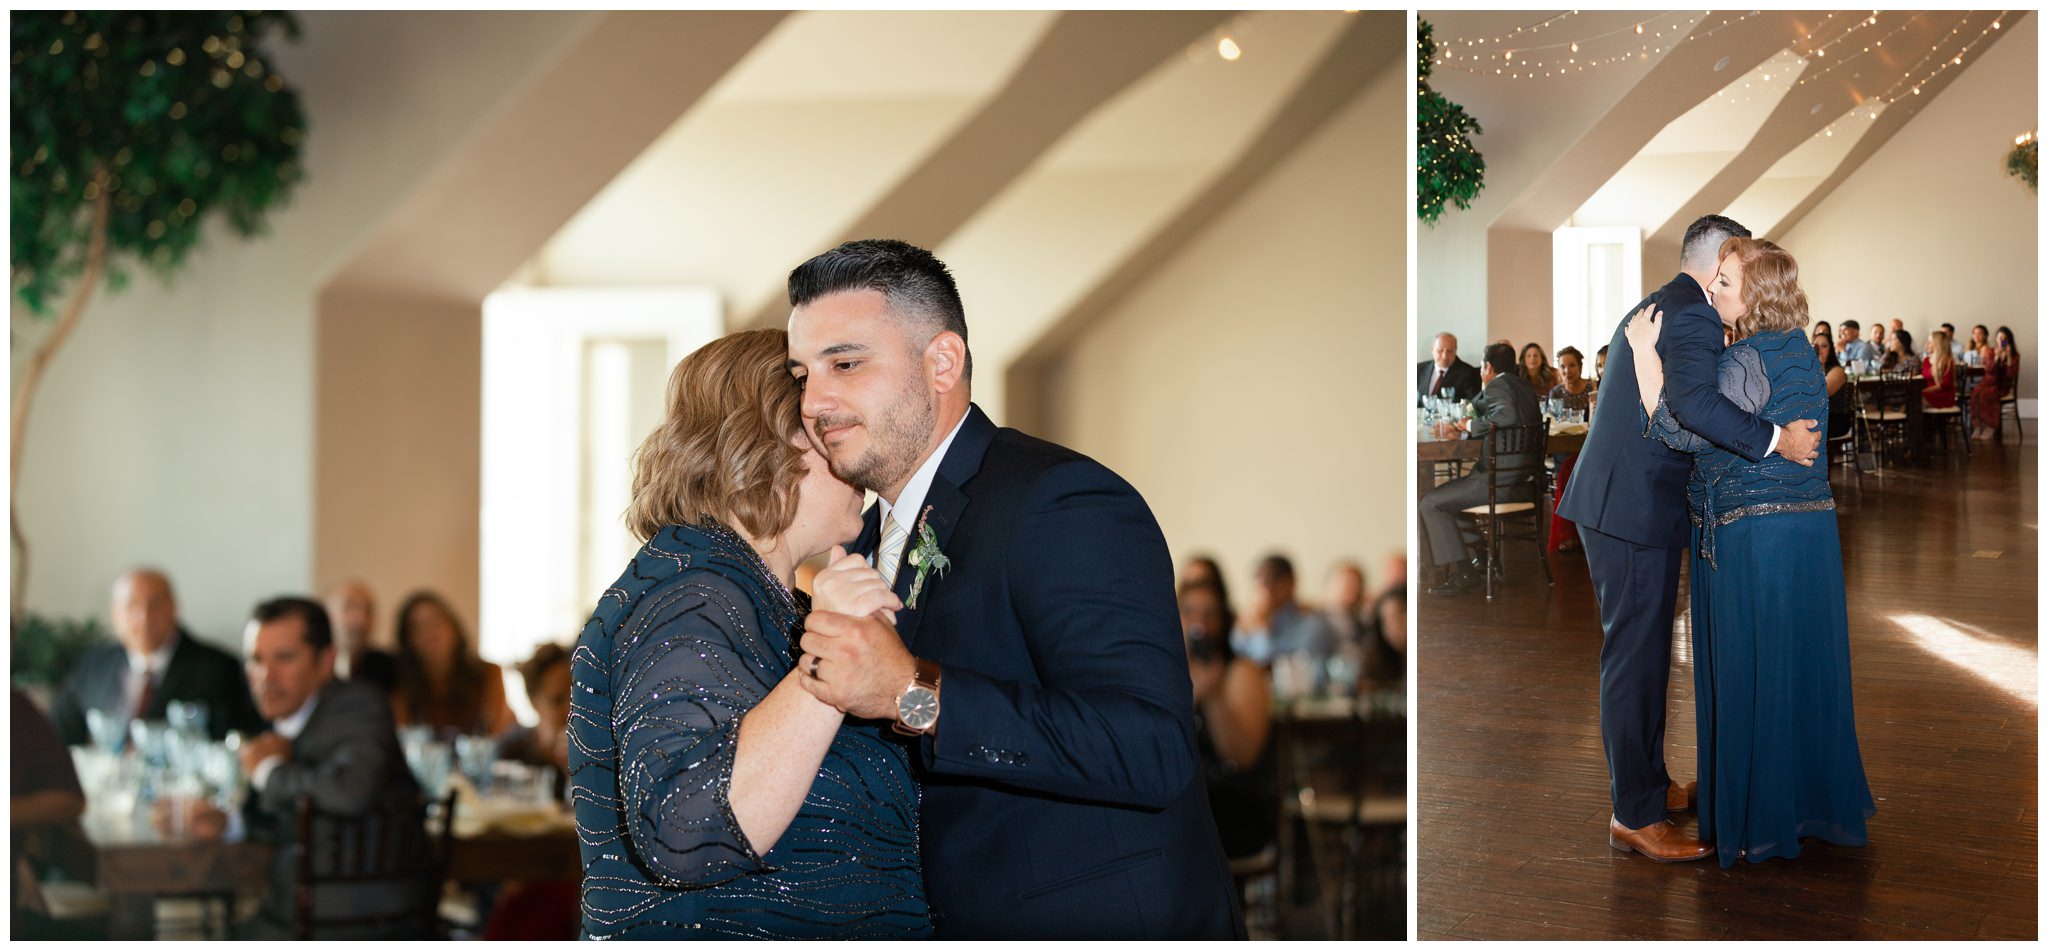 Groom dancing with his mom at Vineyard wedding Venue